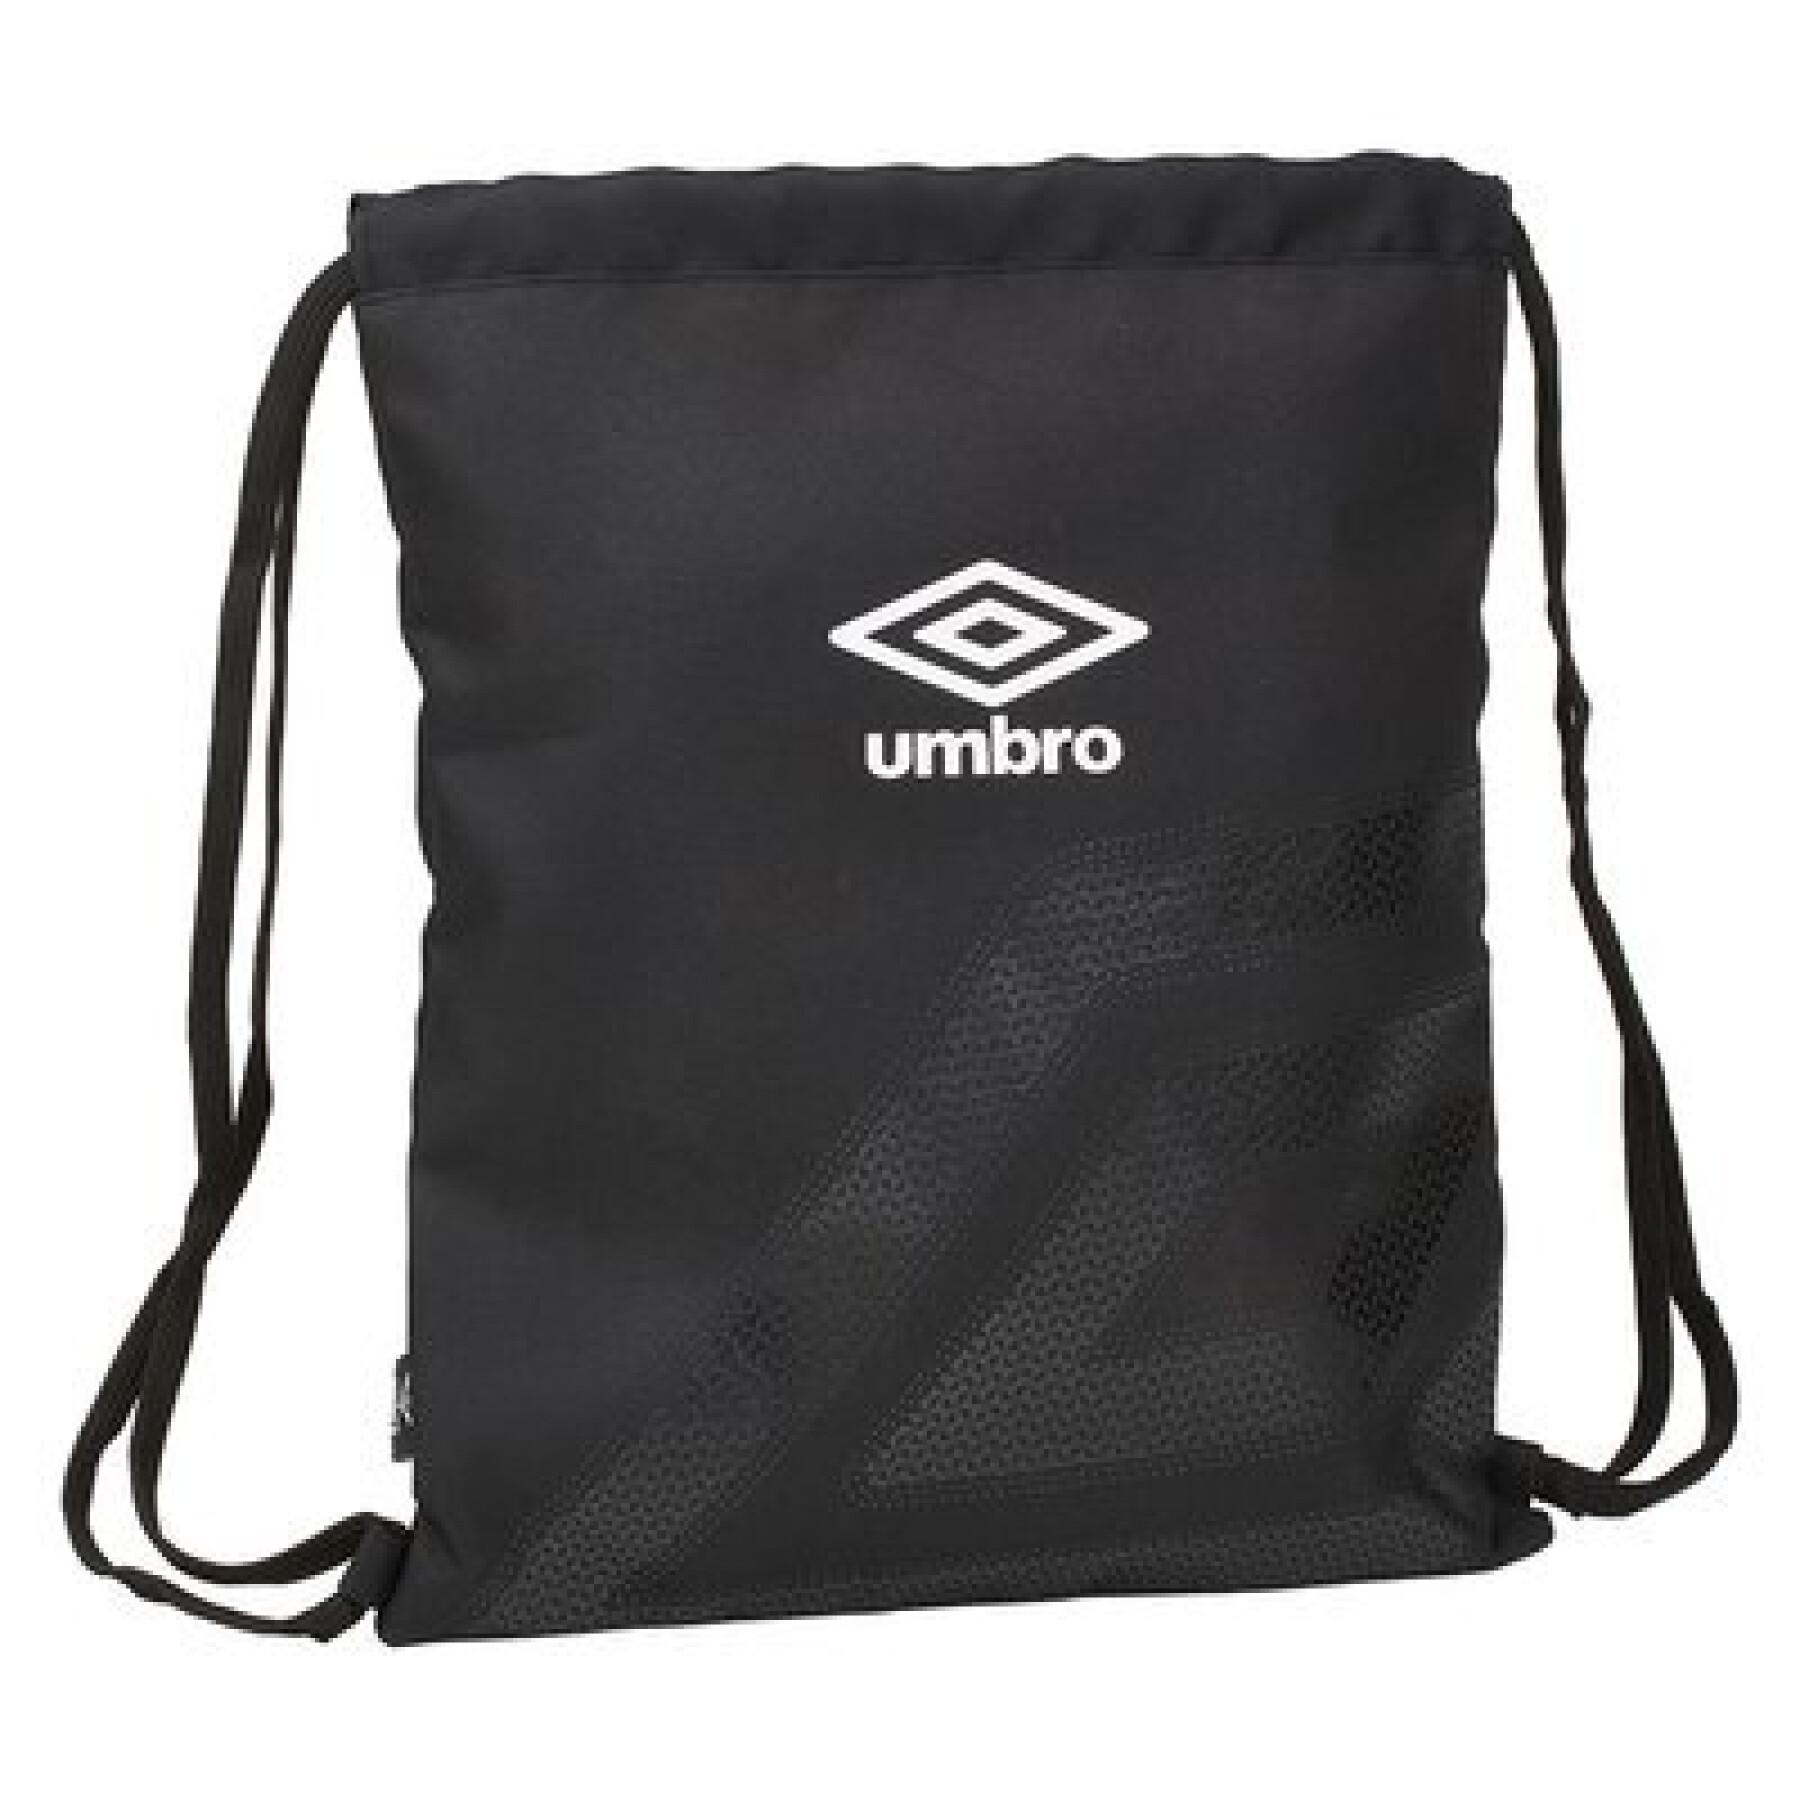 Children's sports bag Umbro